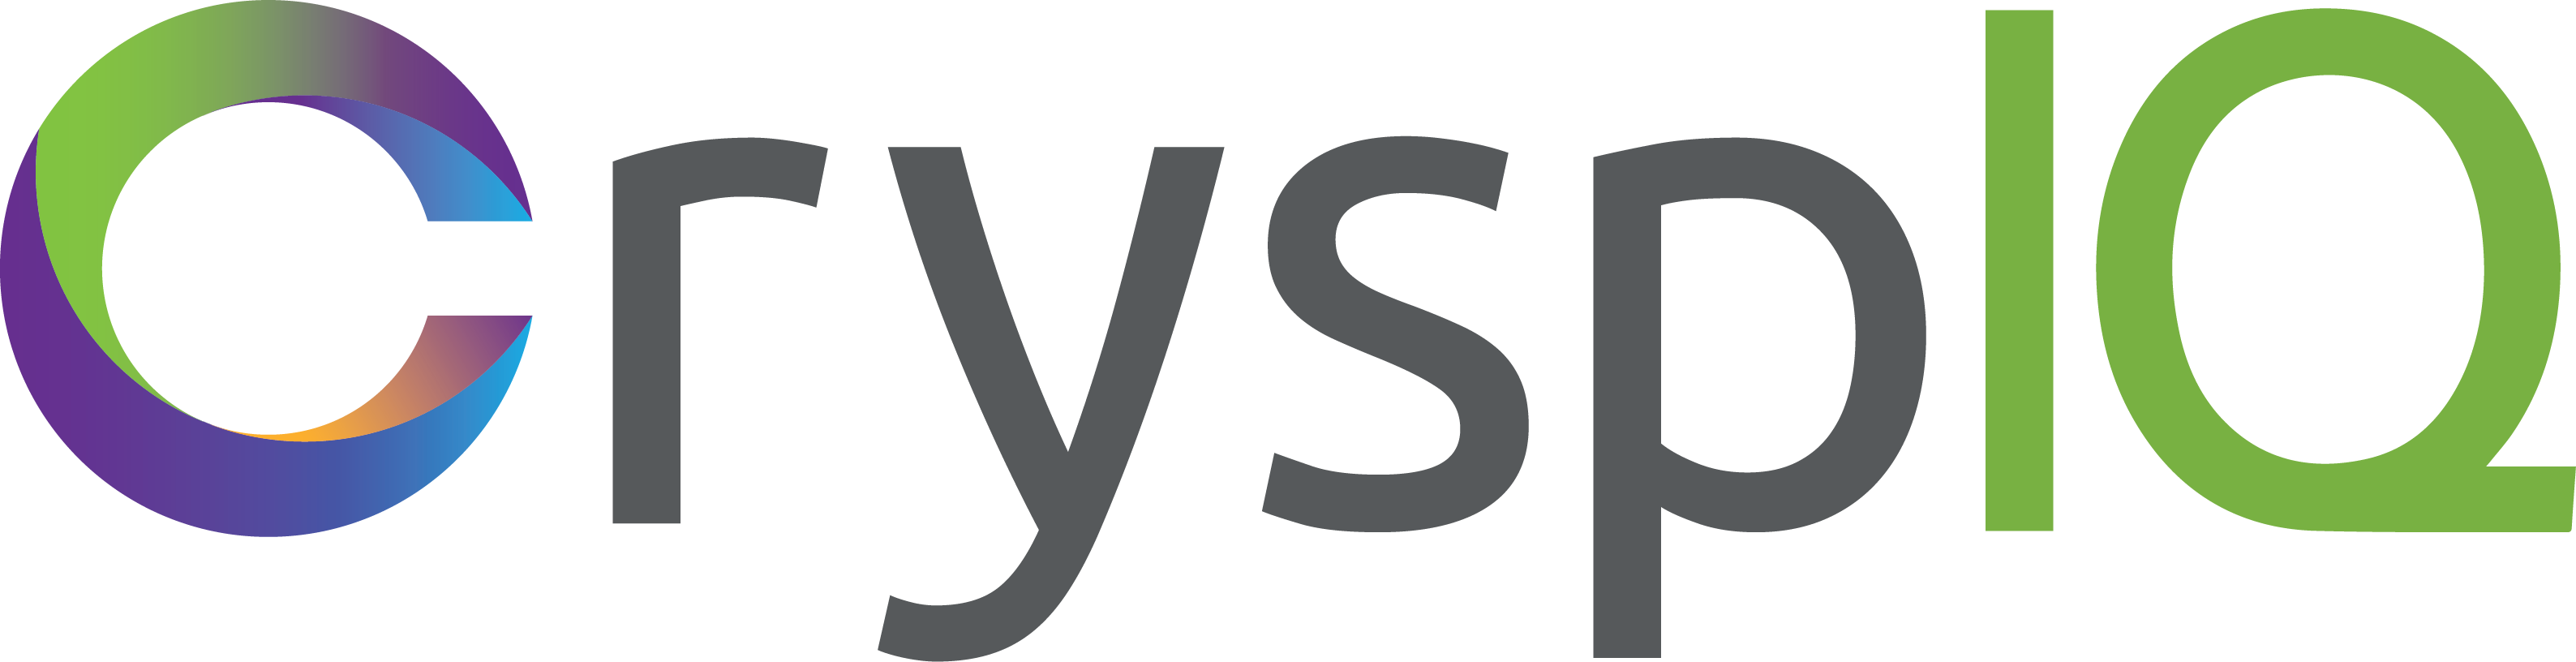 CryspIQ Logo